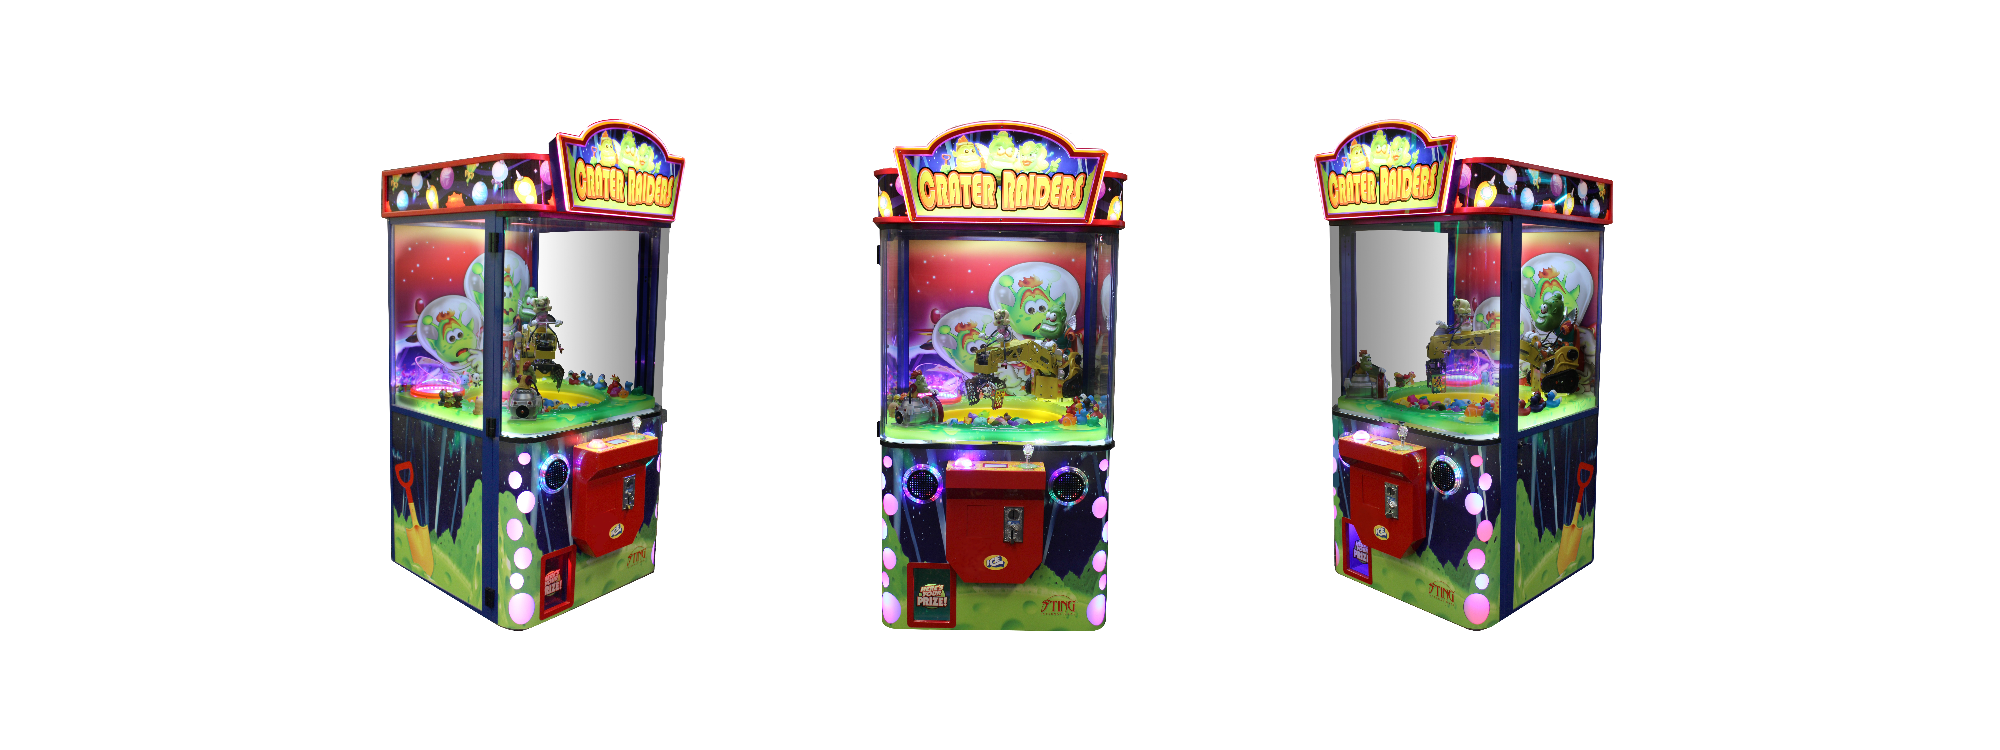 Crater Raiders arcade game